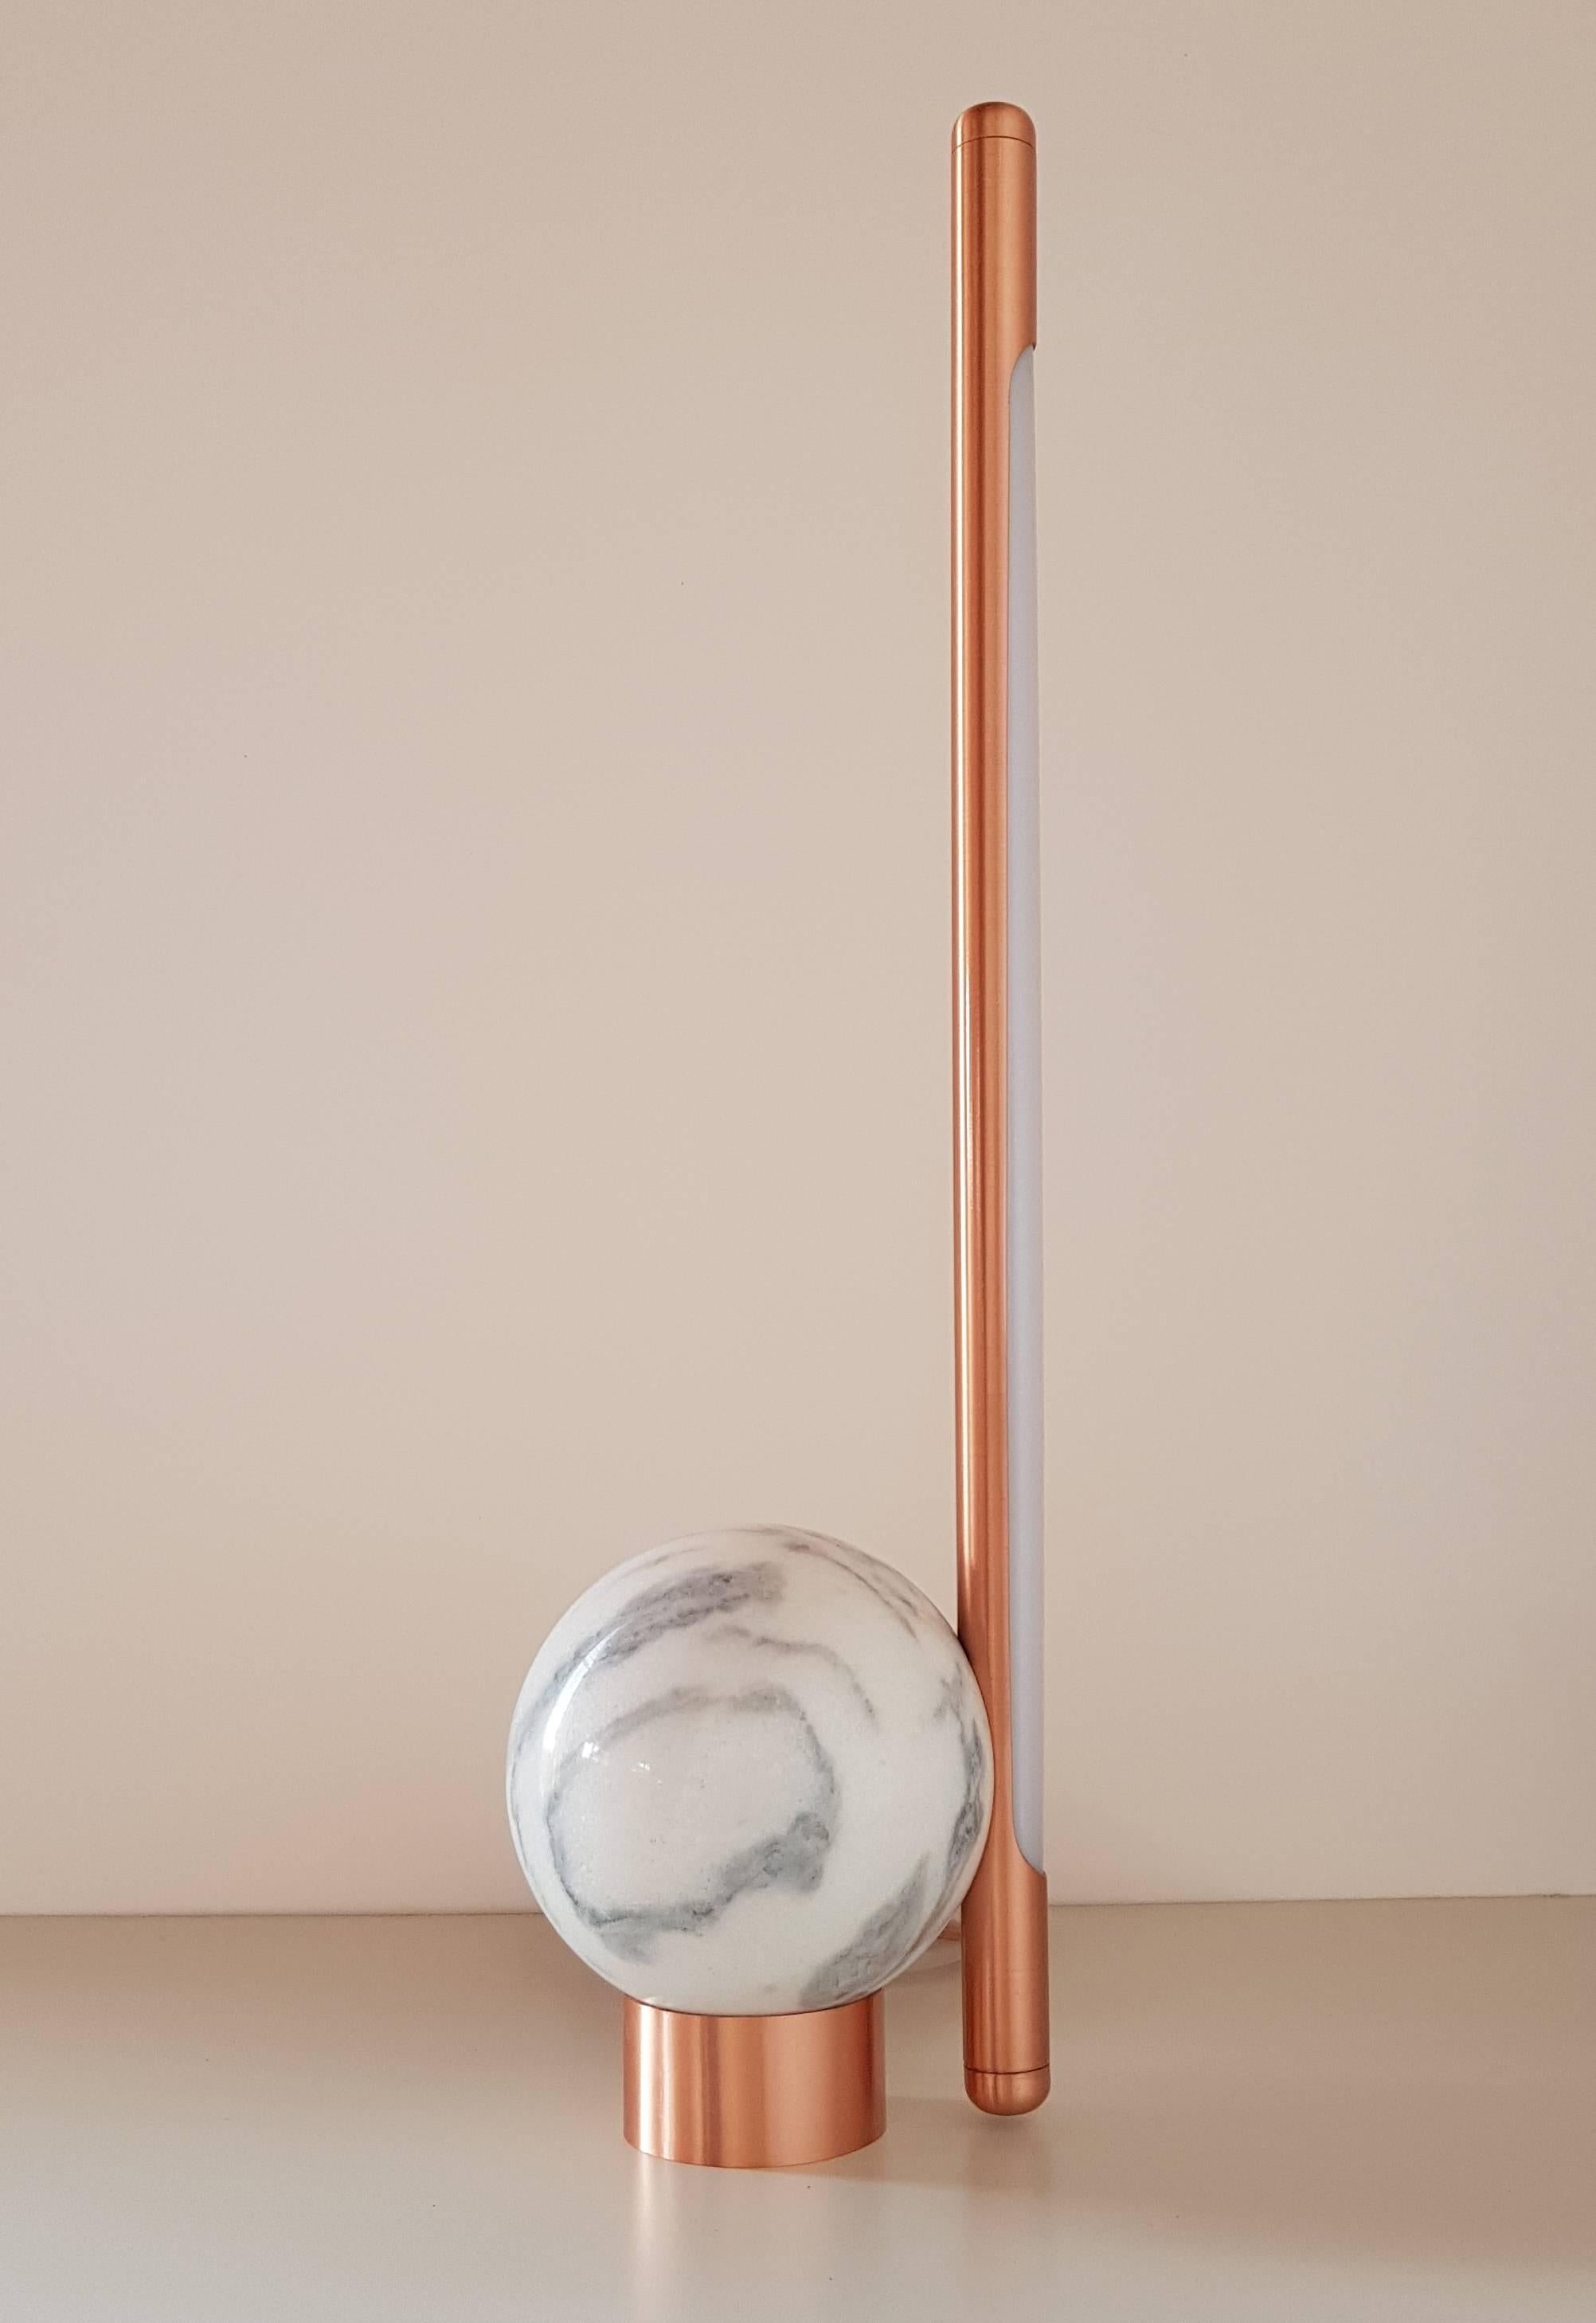 Minimalist 'Bubble' Table Lamp in Marble and Copper, Brazilian Contemporary Style